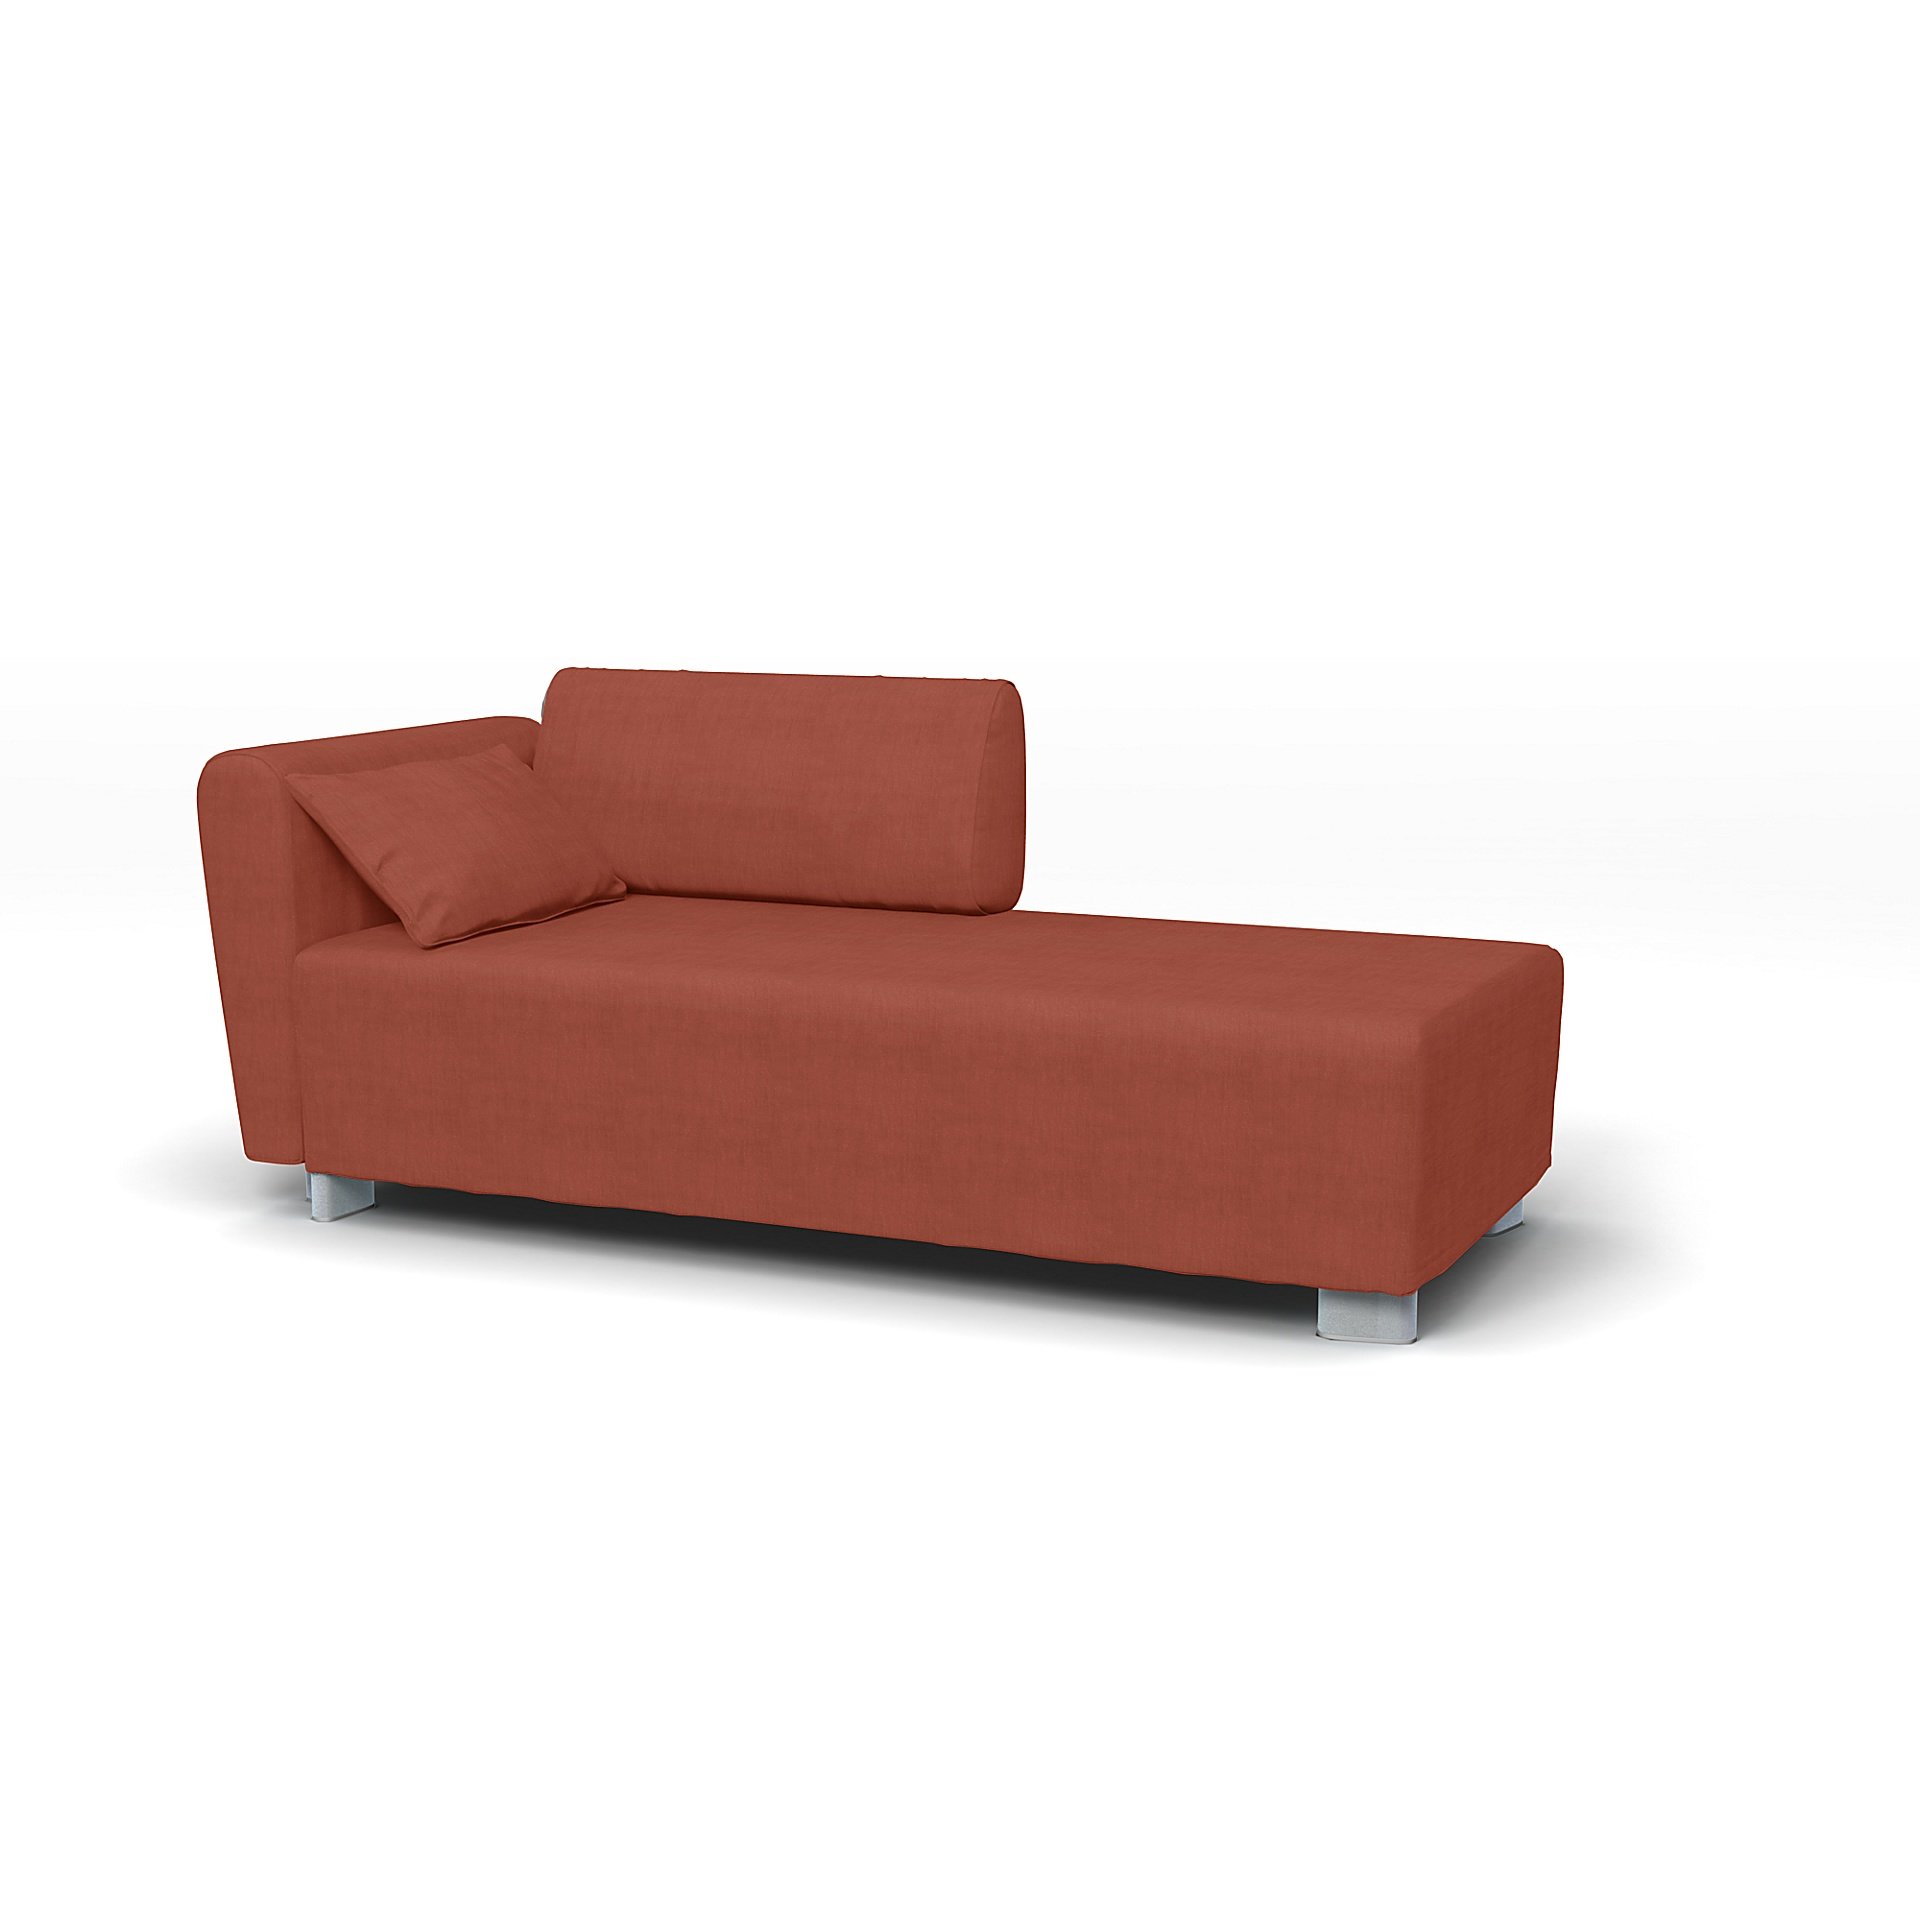 IKEA - Mysinge Chaise Longue with Armrest Cover, Terracotta, Linen - Bemz